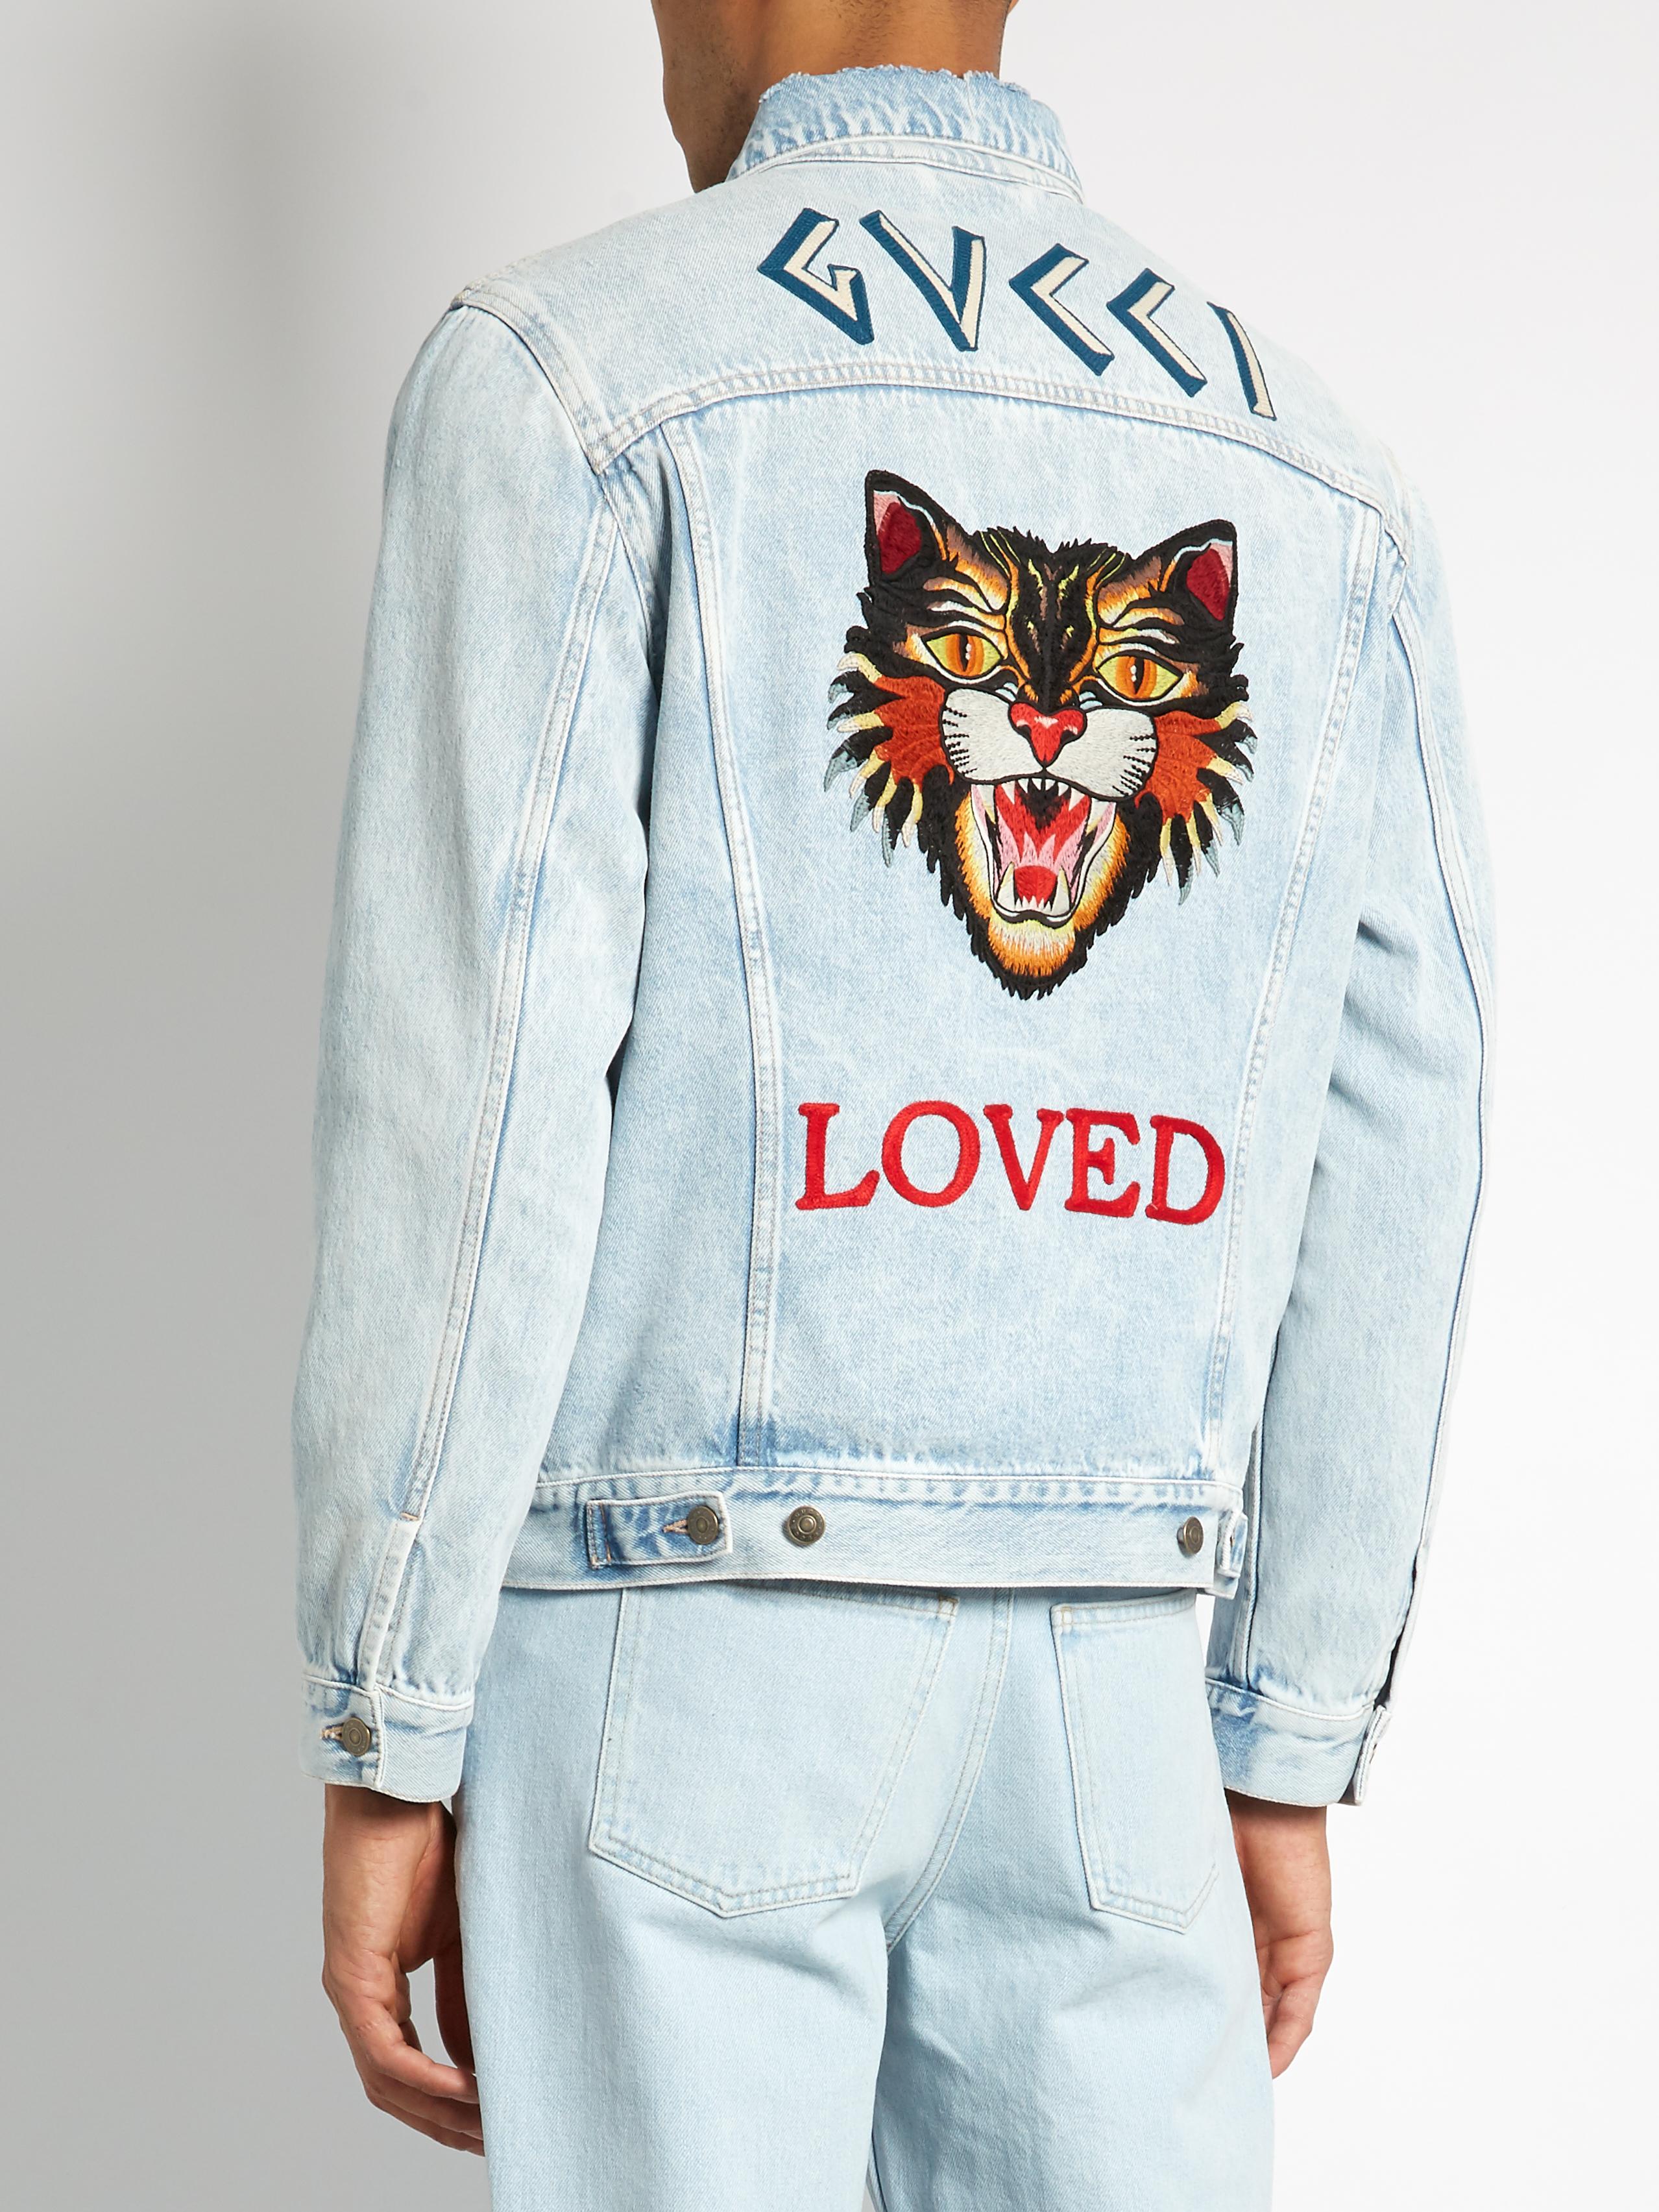 Gucci Loved-embroidered Denim Jacket in Light Blue (Blue) for Men - Lyst